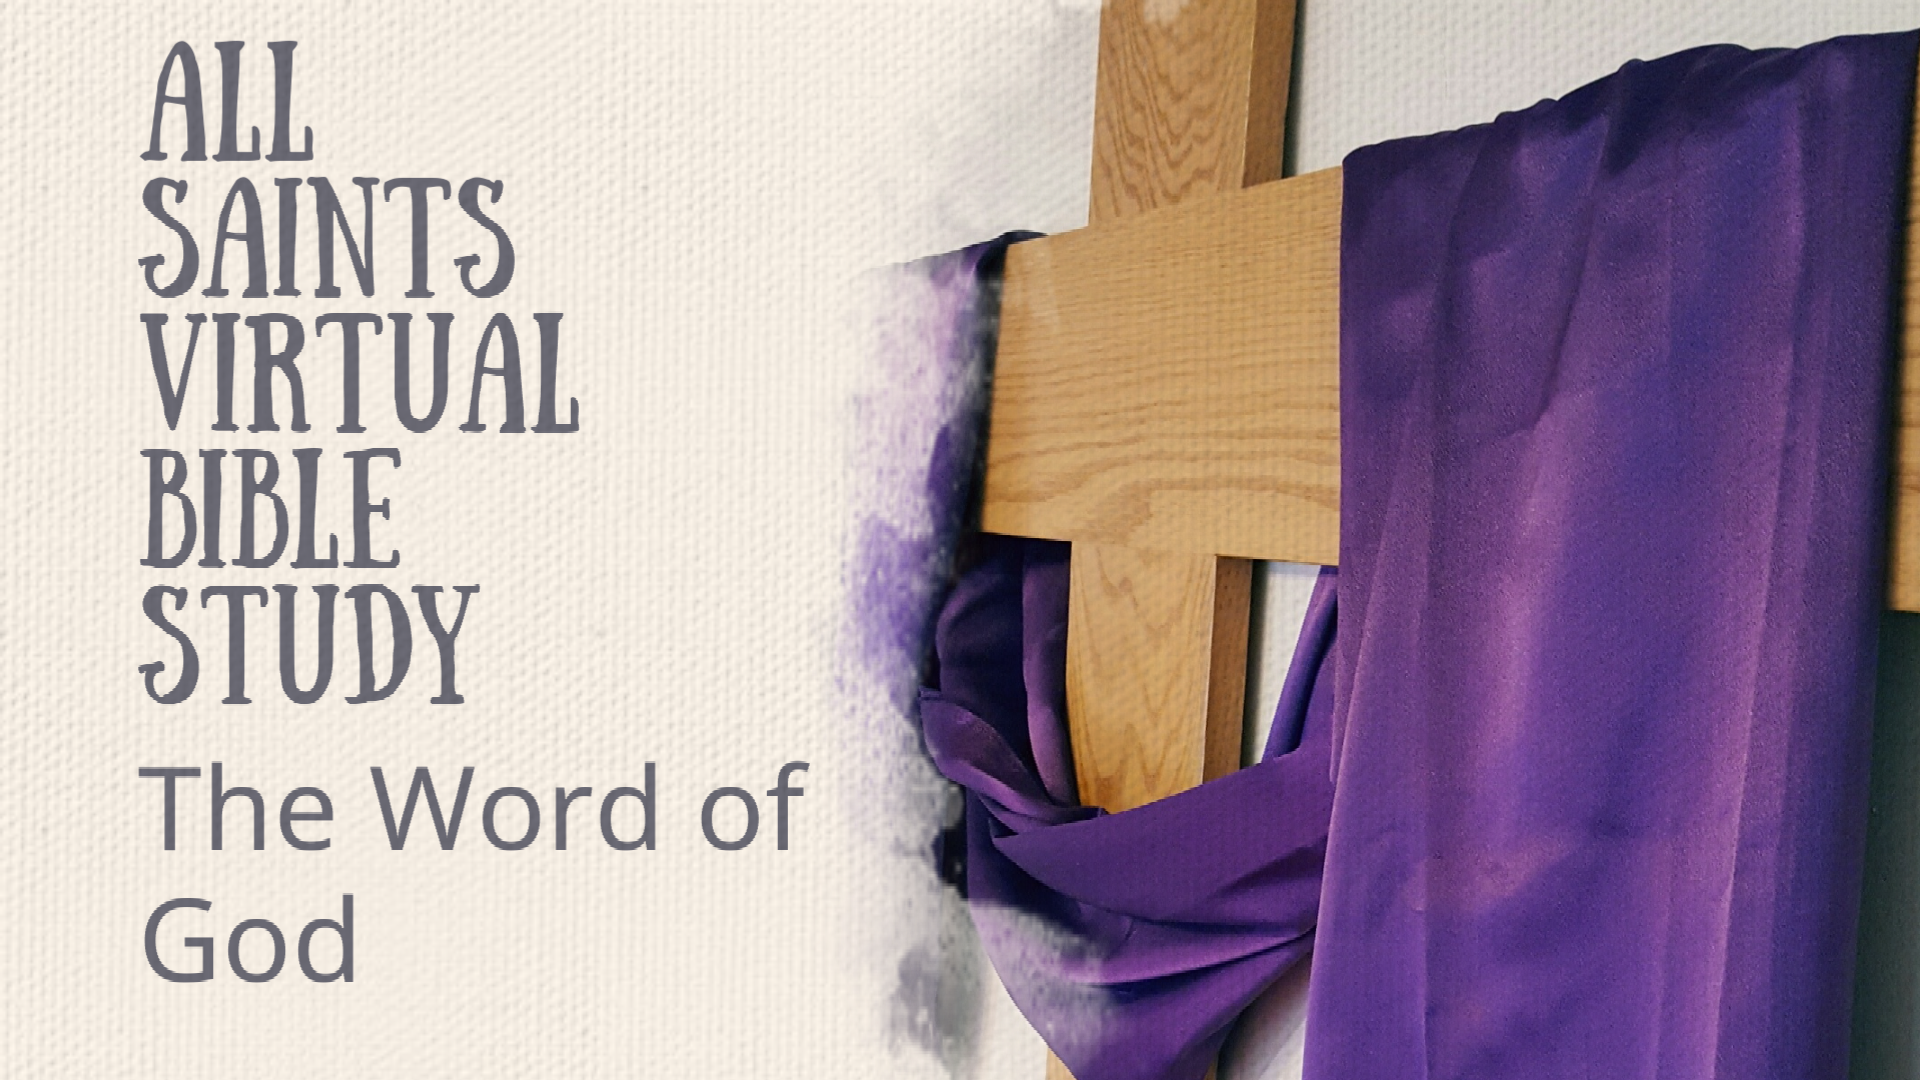 All Saints Virtual Bible Study - The Word of God